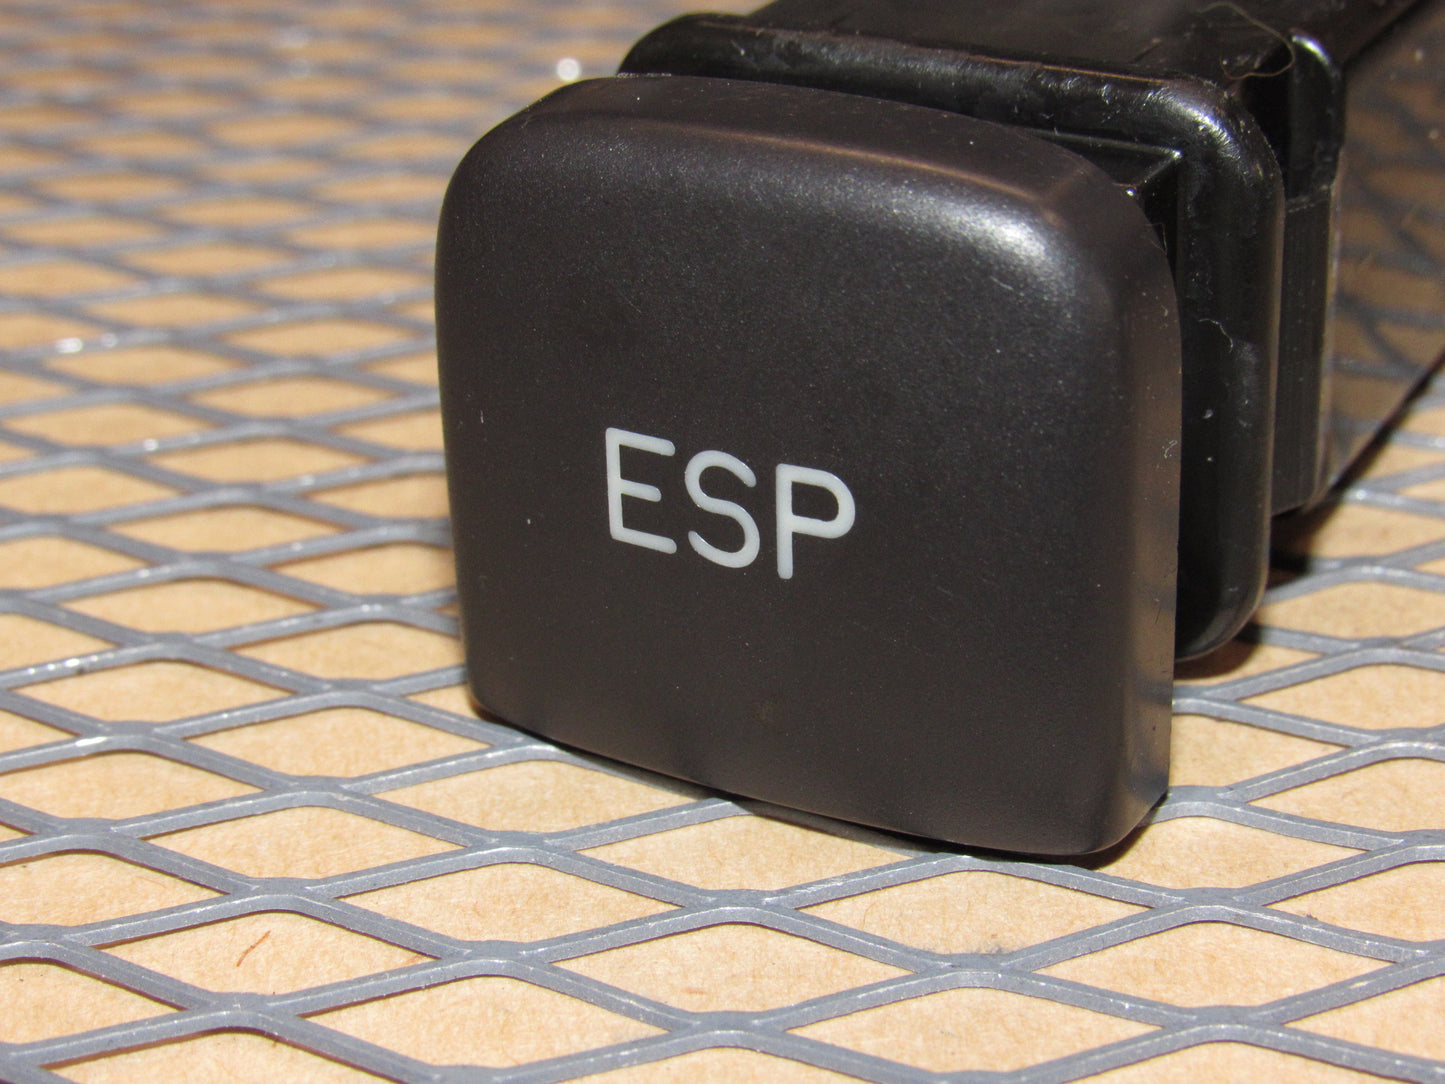 99 00 01 02 03 04 05 Saab 9-5 OEM Traction ESP Switch